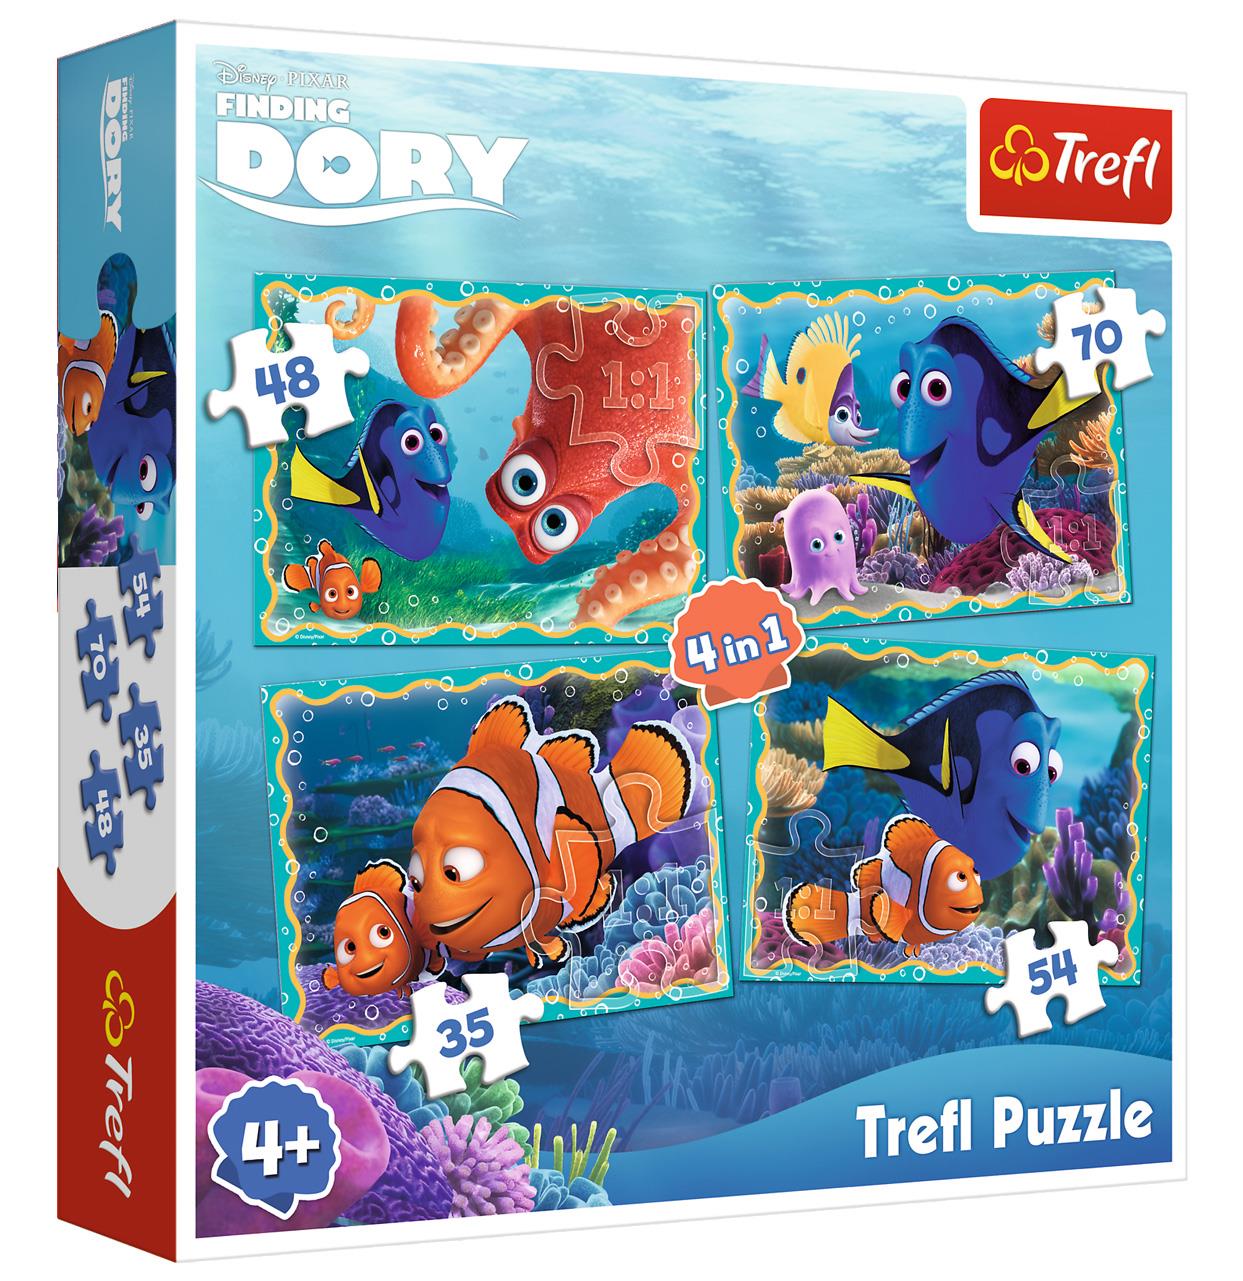 Trefl Çocuk Puzzle 34259 Finding Dory Underwater, Disney 35+48+54+70 Parça 4 in 1 Puzzle